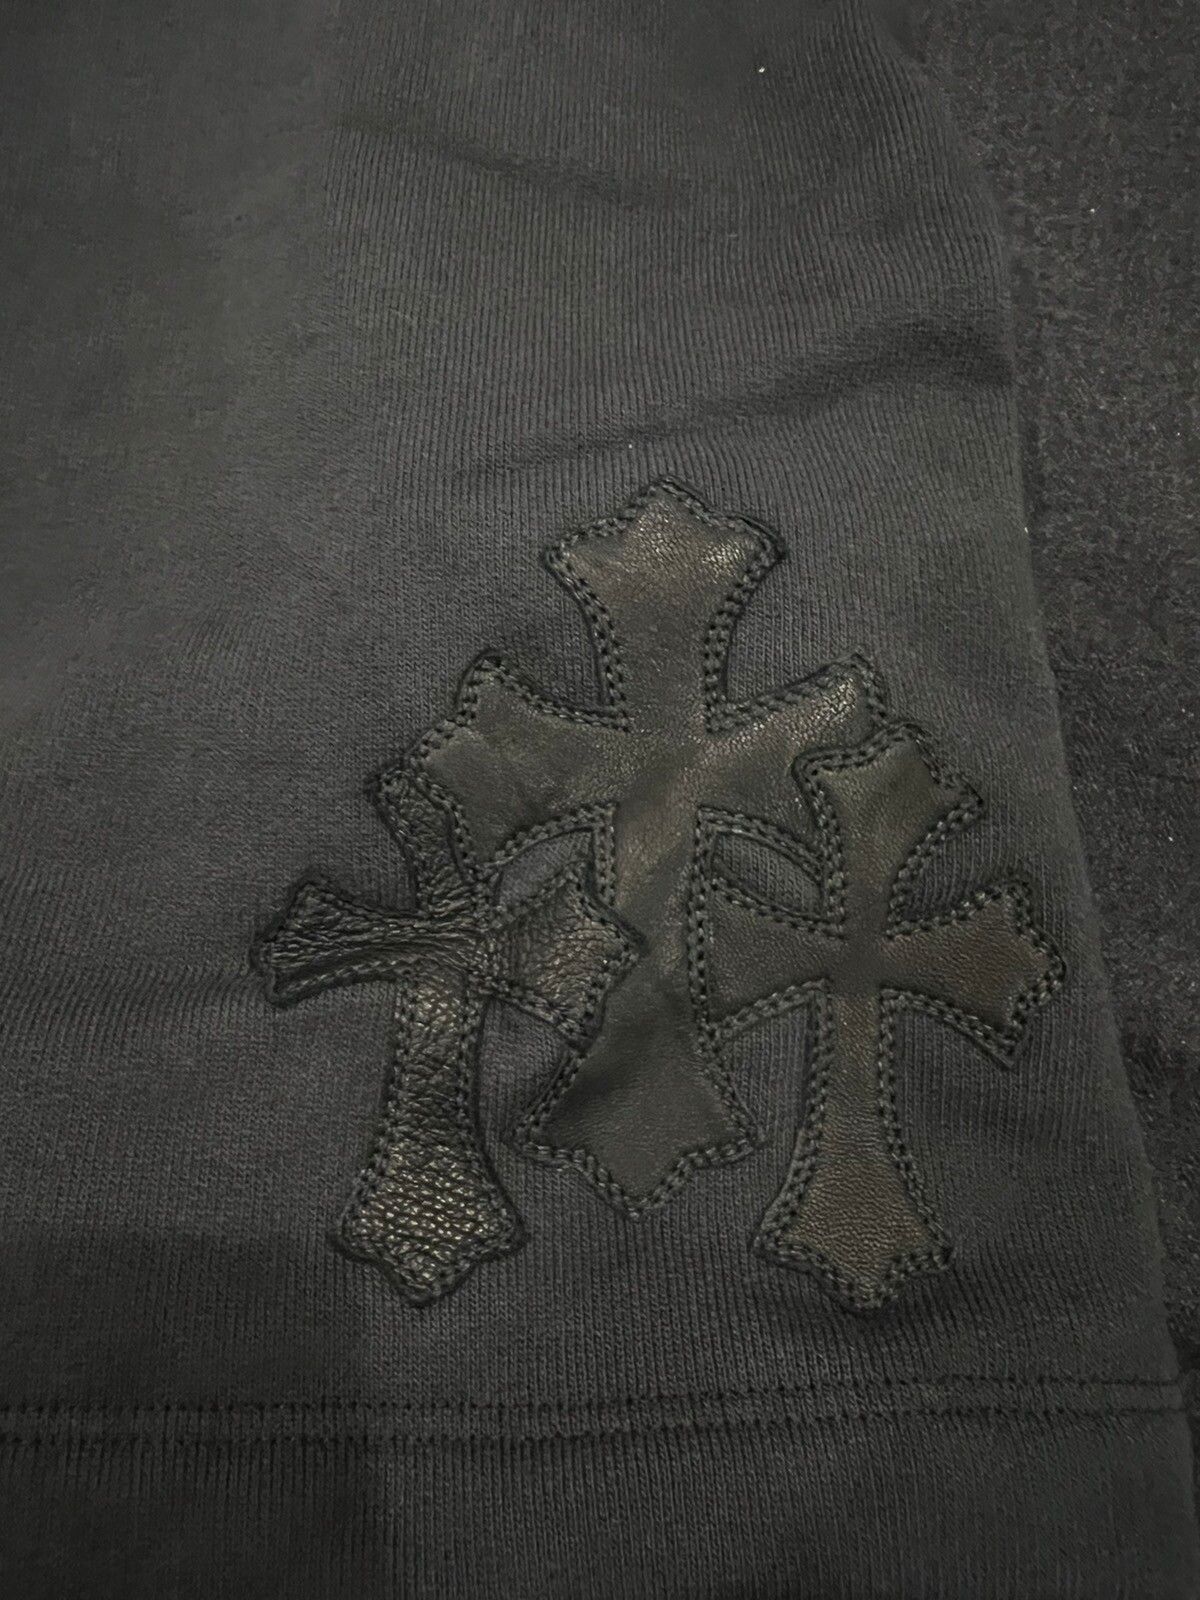 Triple leather cross patch paper jam sweatshorts shorts - 3